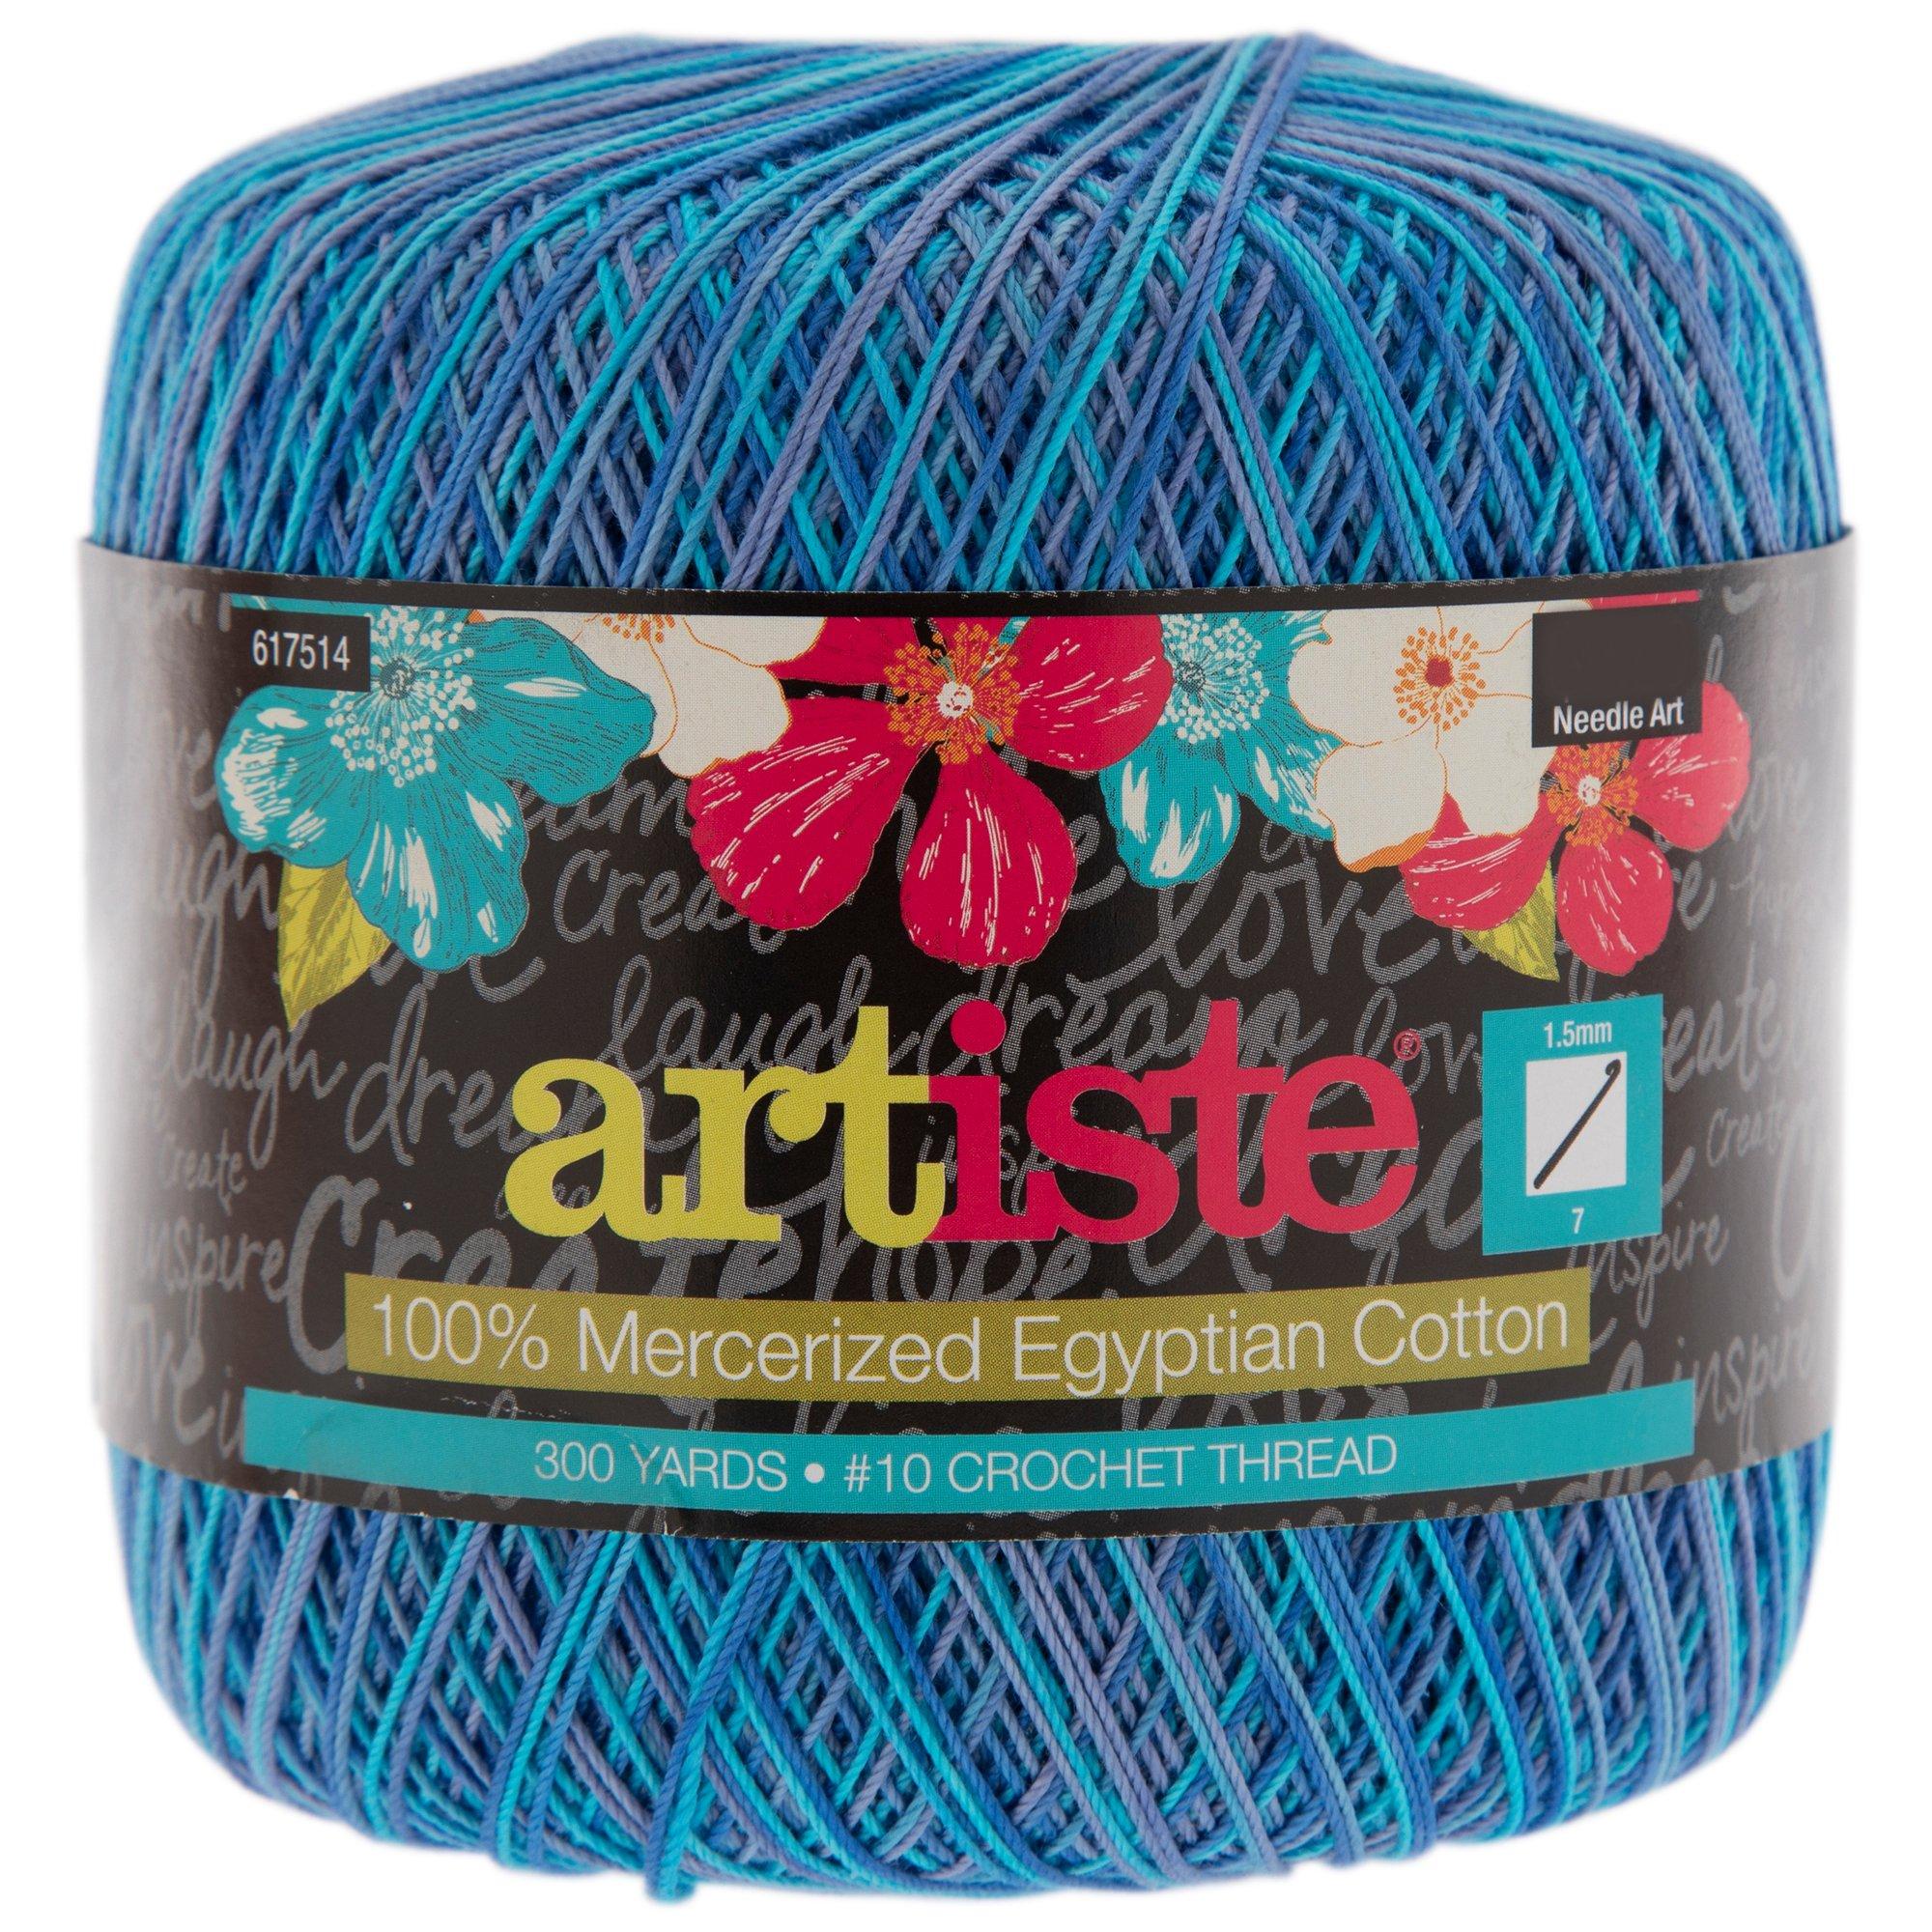 File:Blue crocheting thread.jpg - Wikipedia